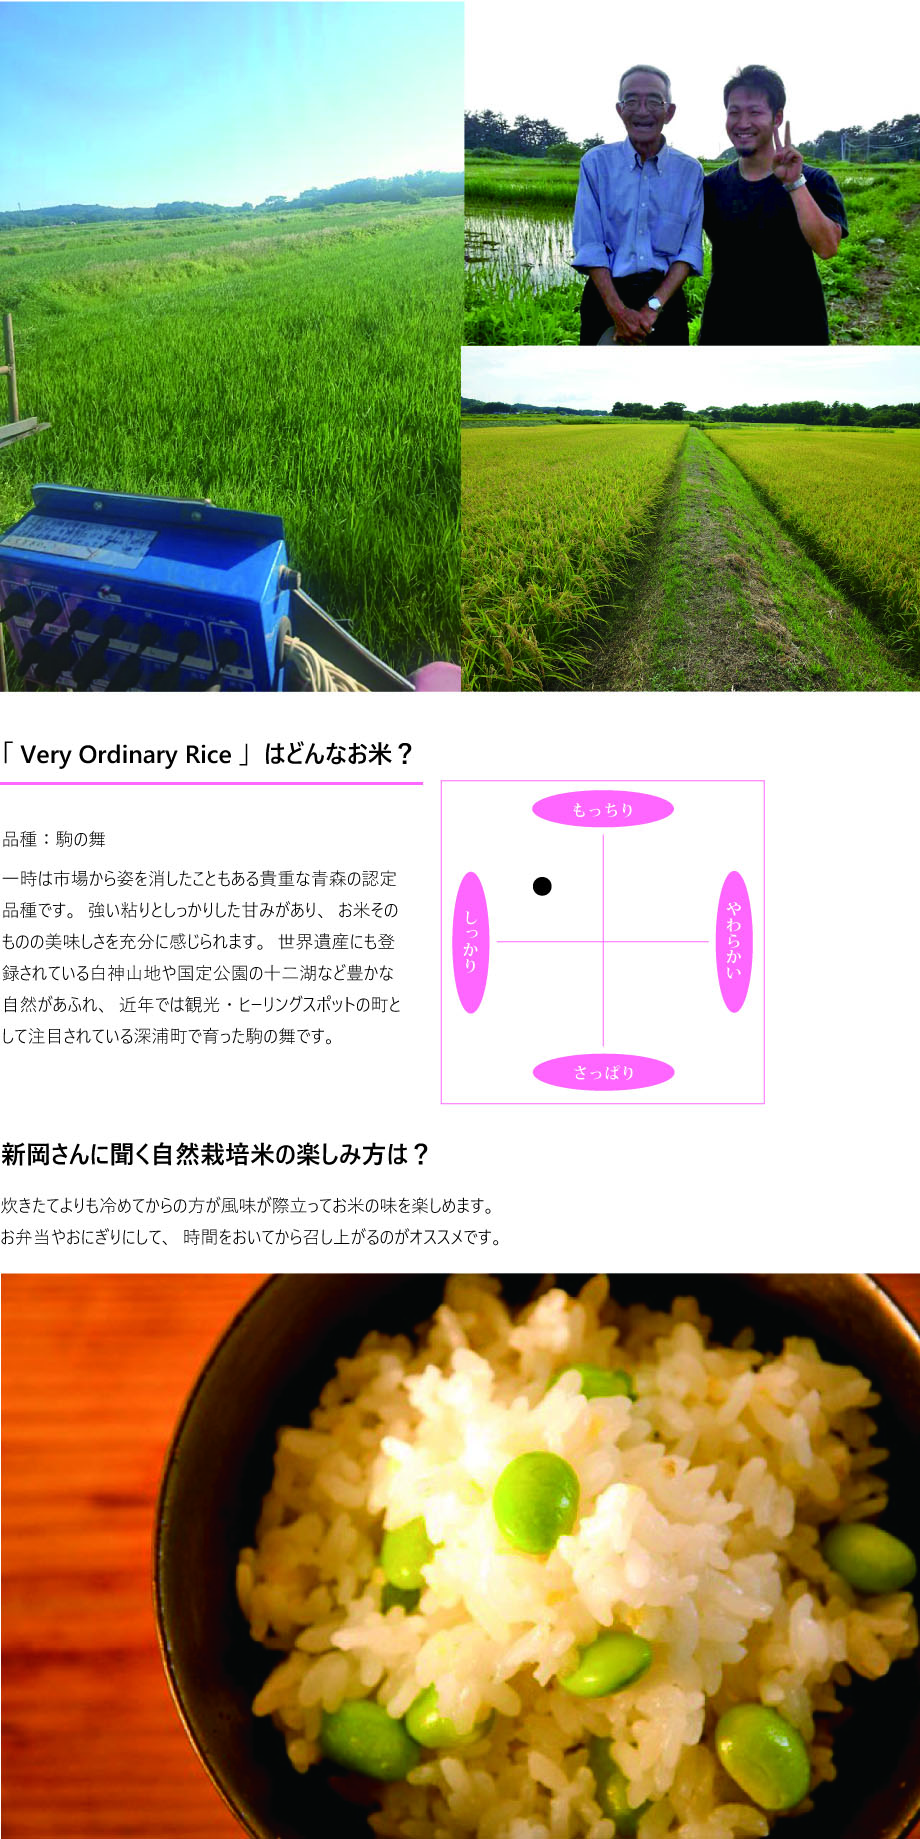 (R03産)Very Ordinary Rice玄米5kg